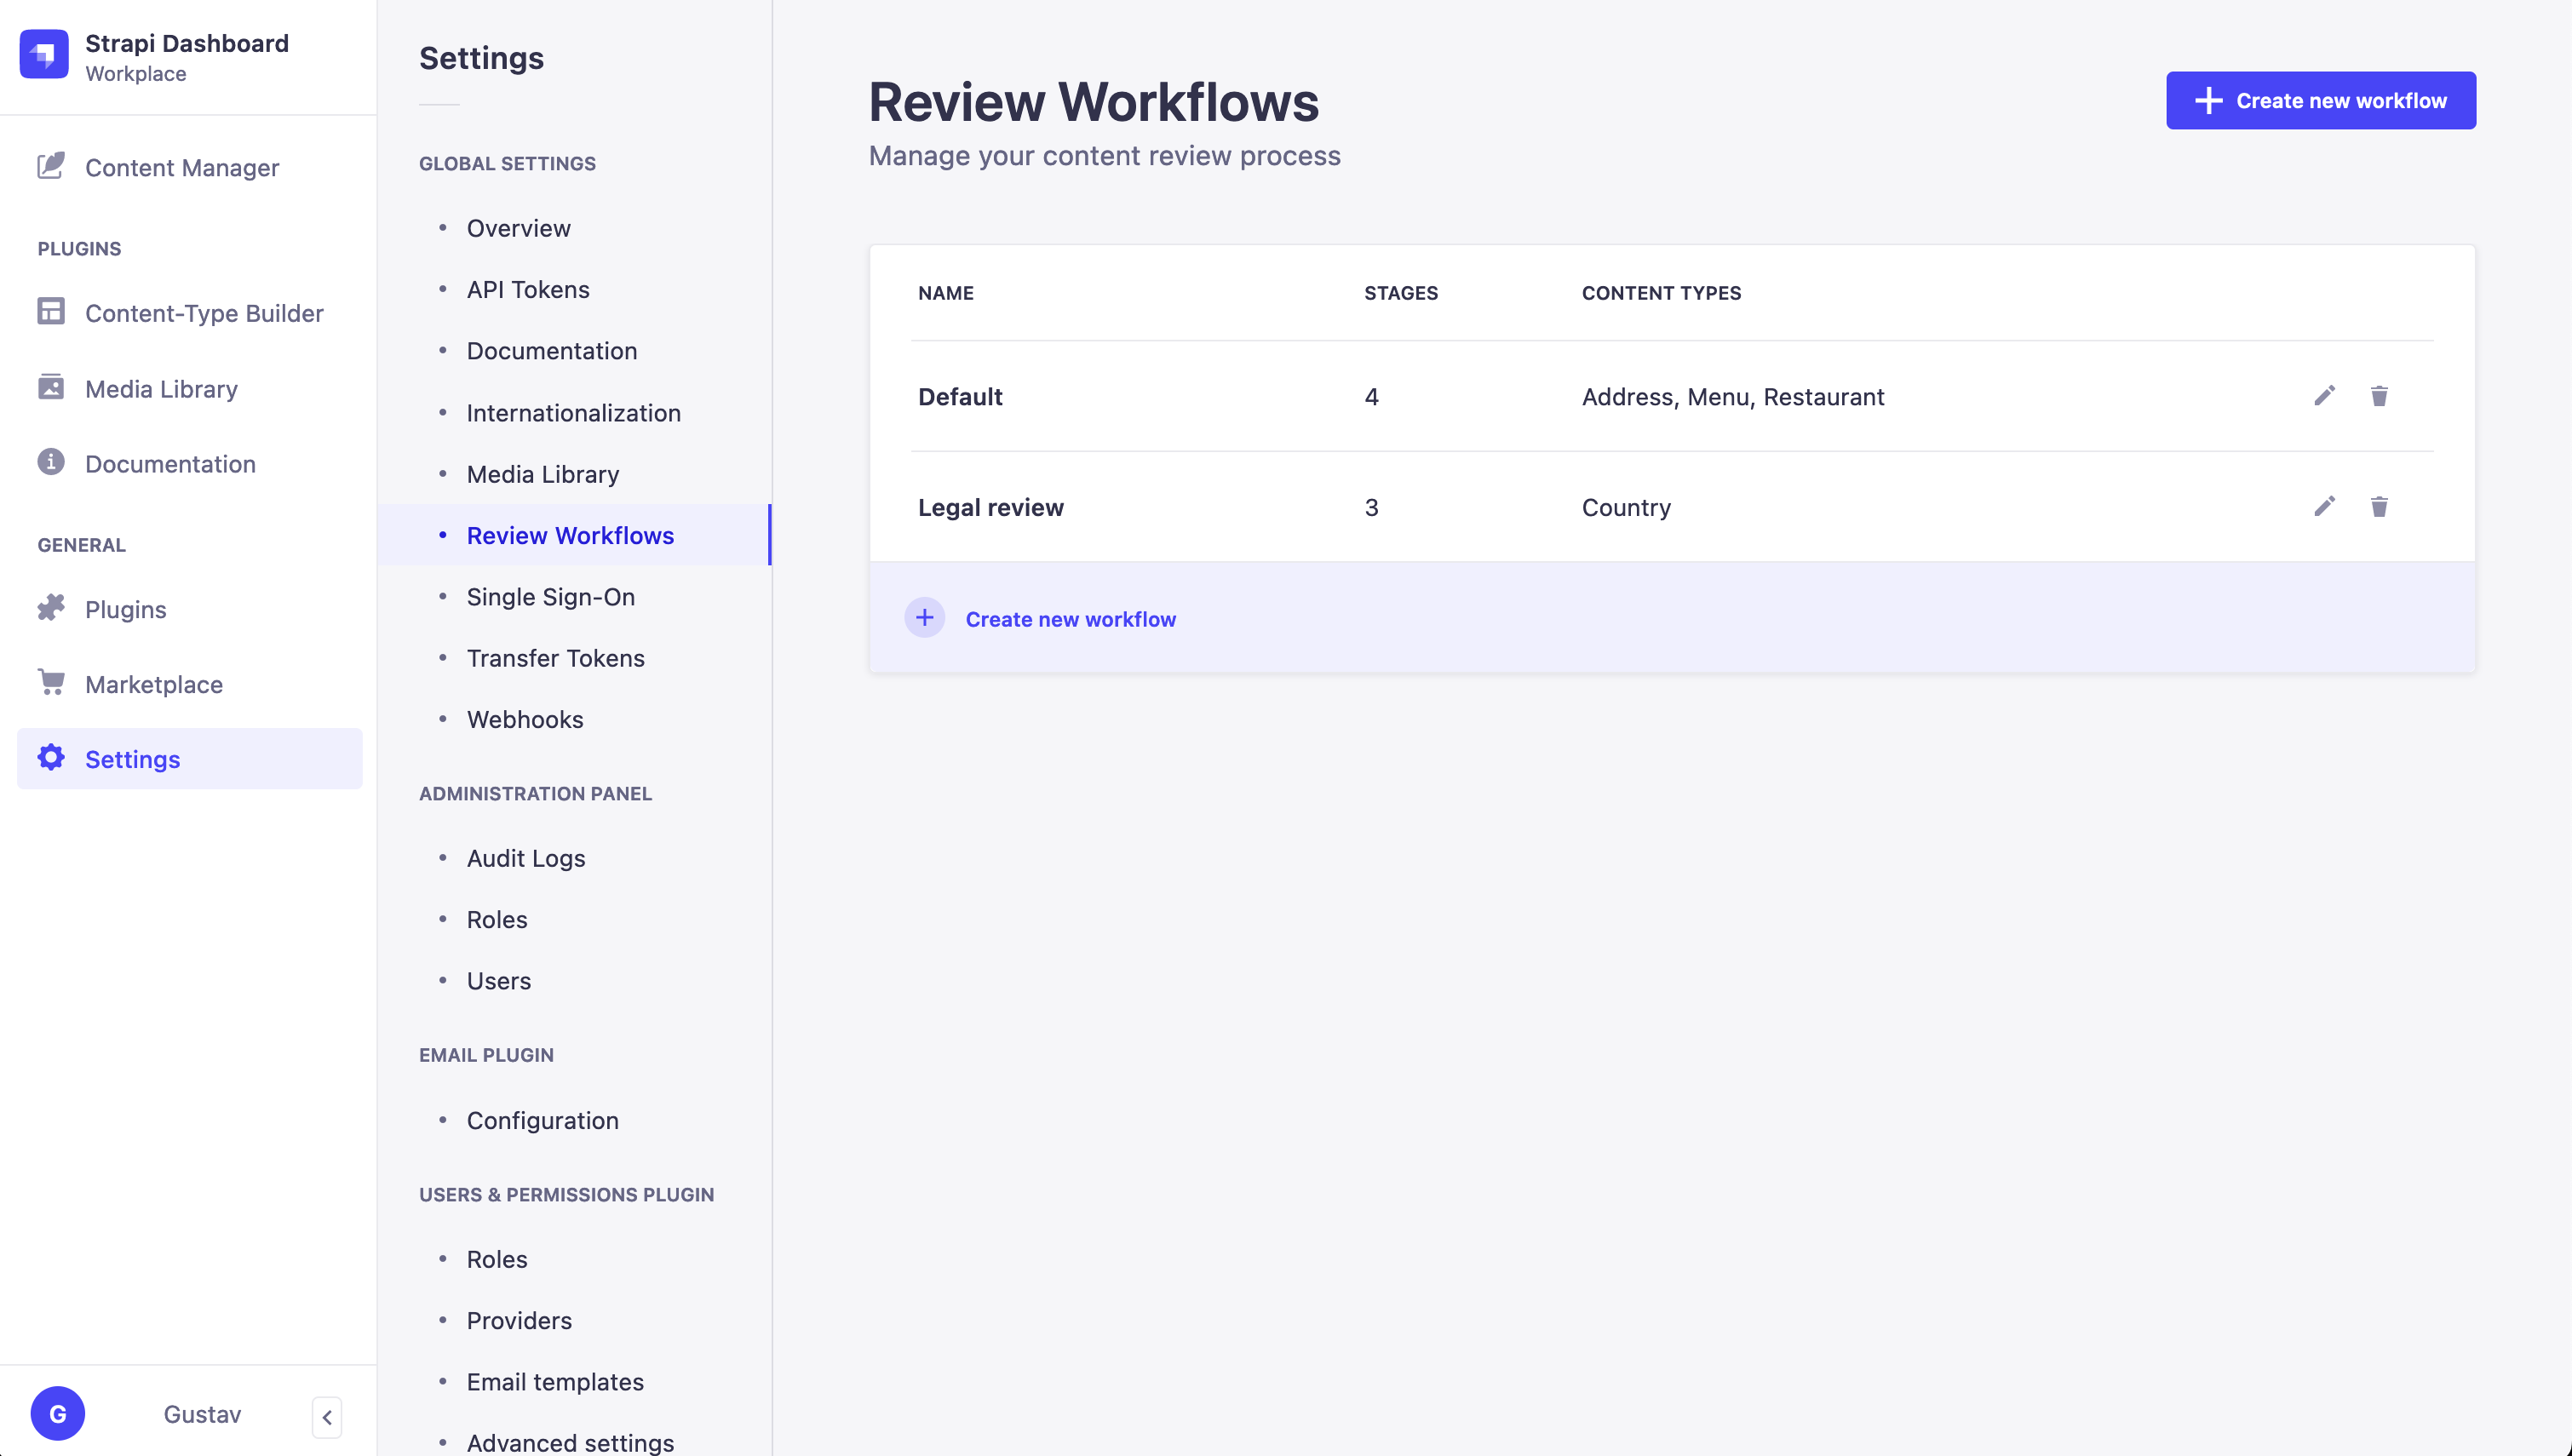 Workflow list view